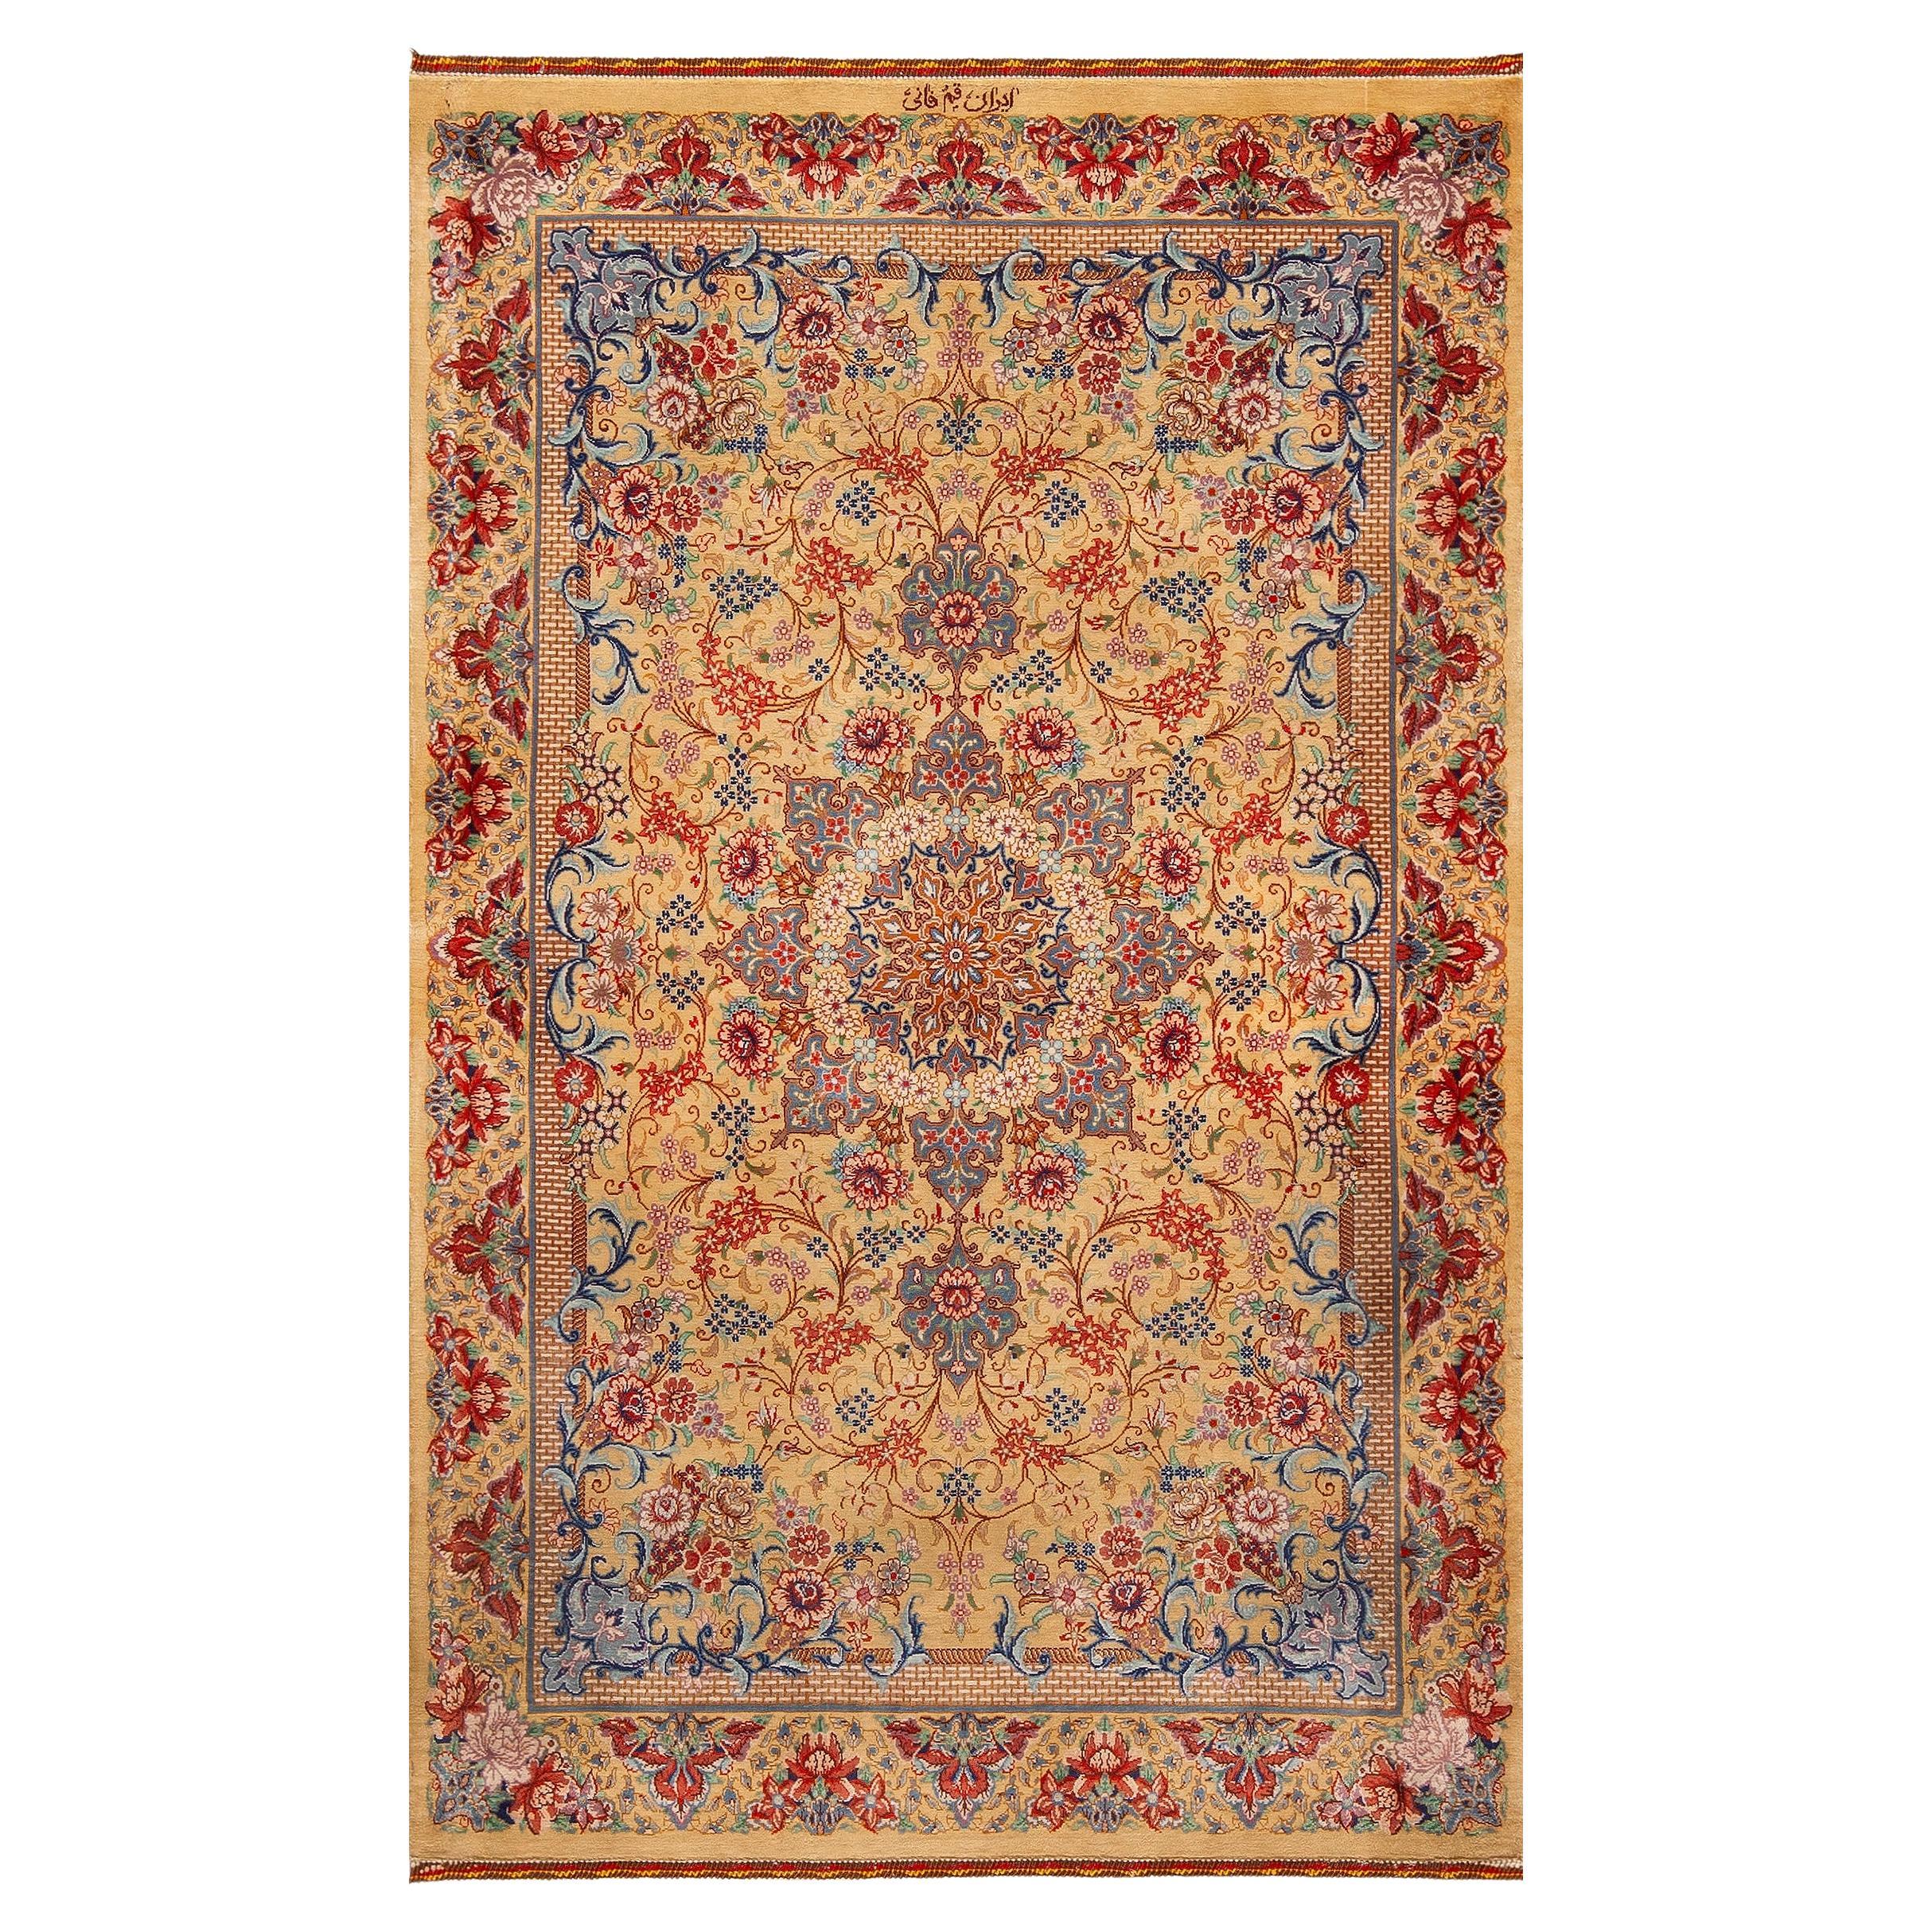 Fine Artistic Small Floral Vintage Luxurious Persian Silk Qum Rug 2'6" x 4'